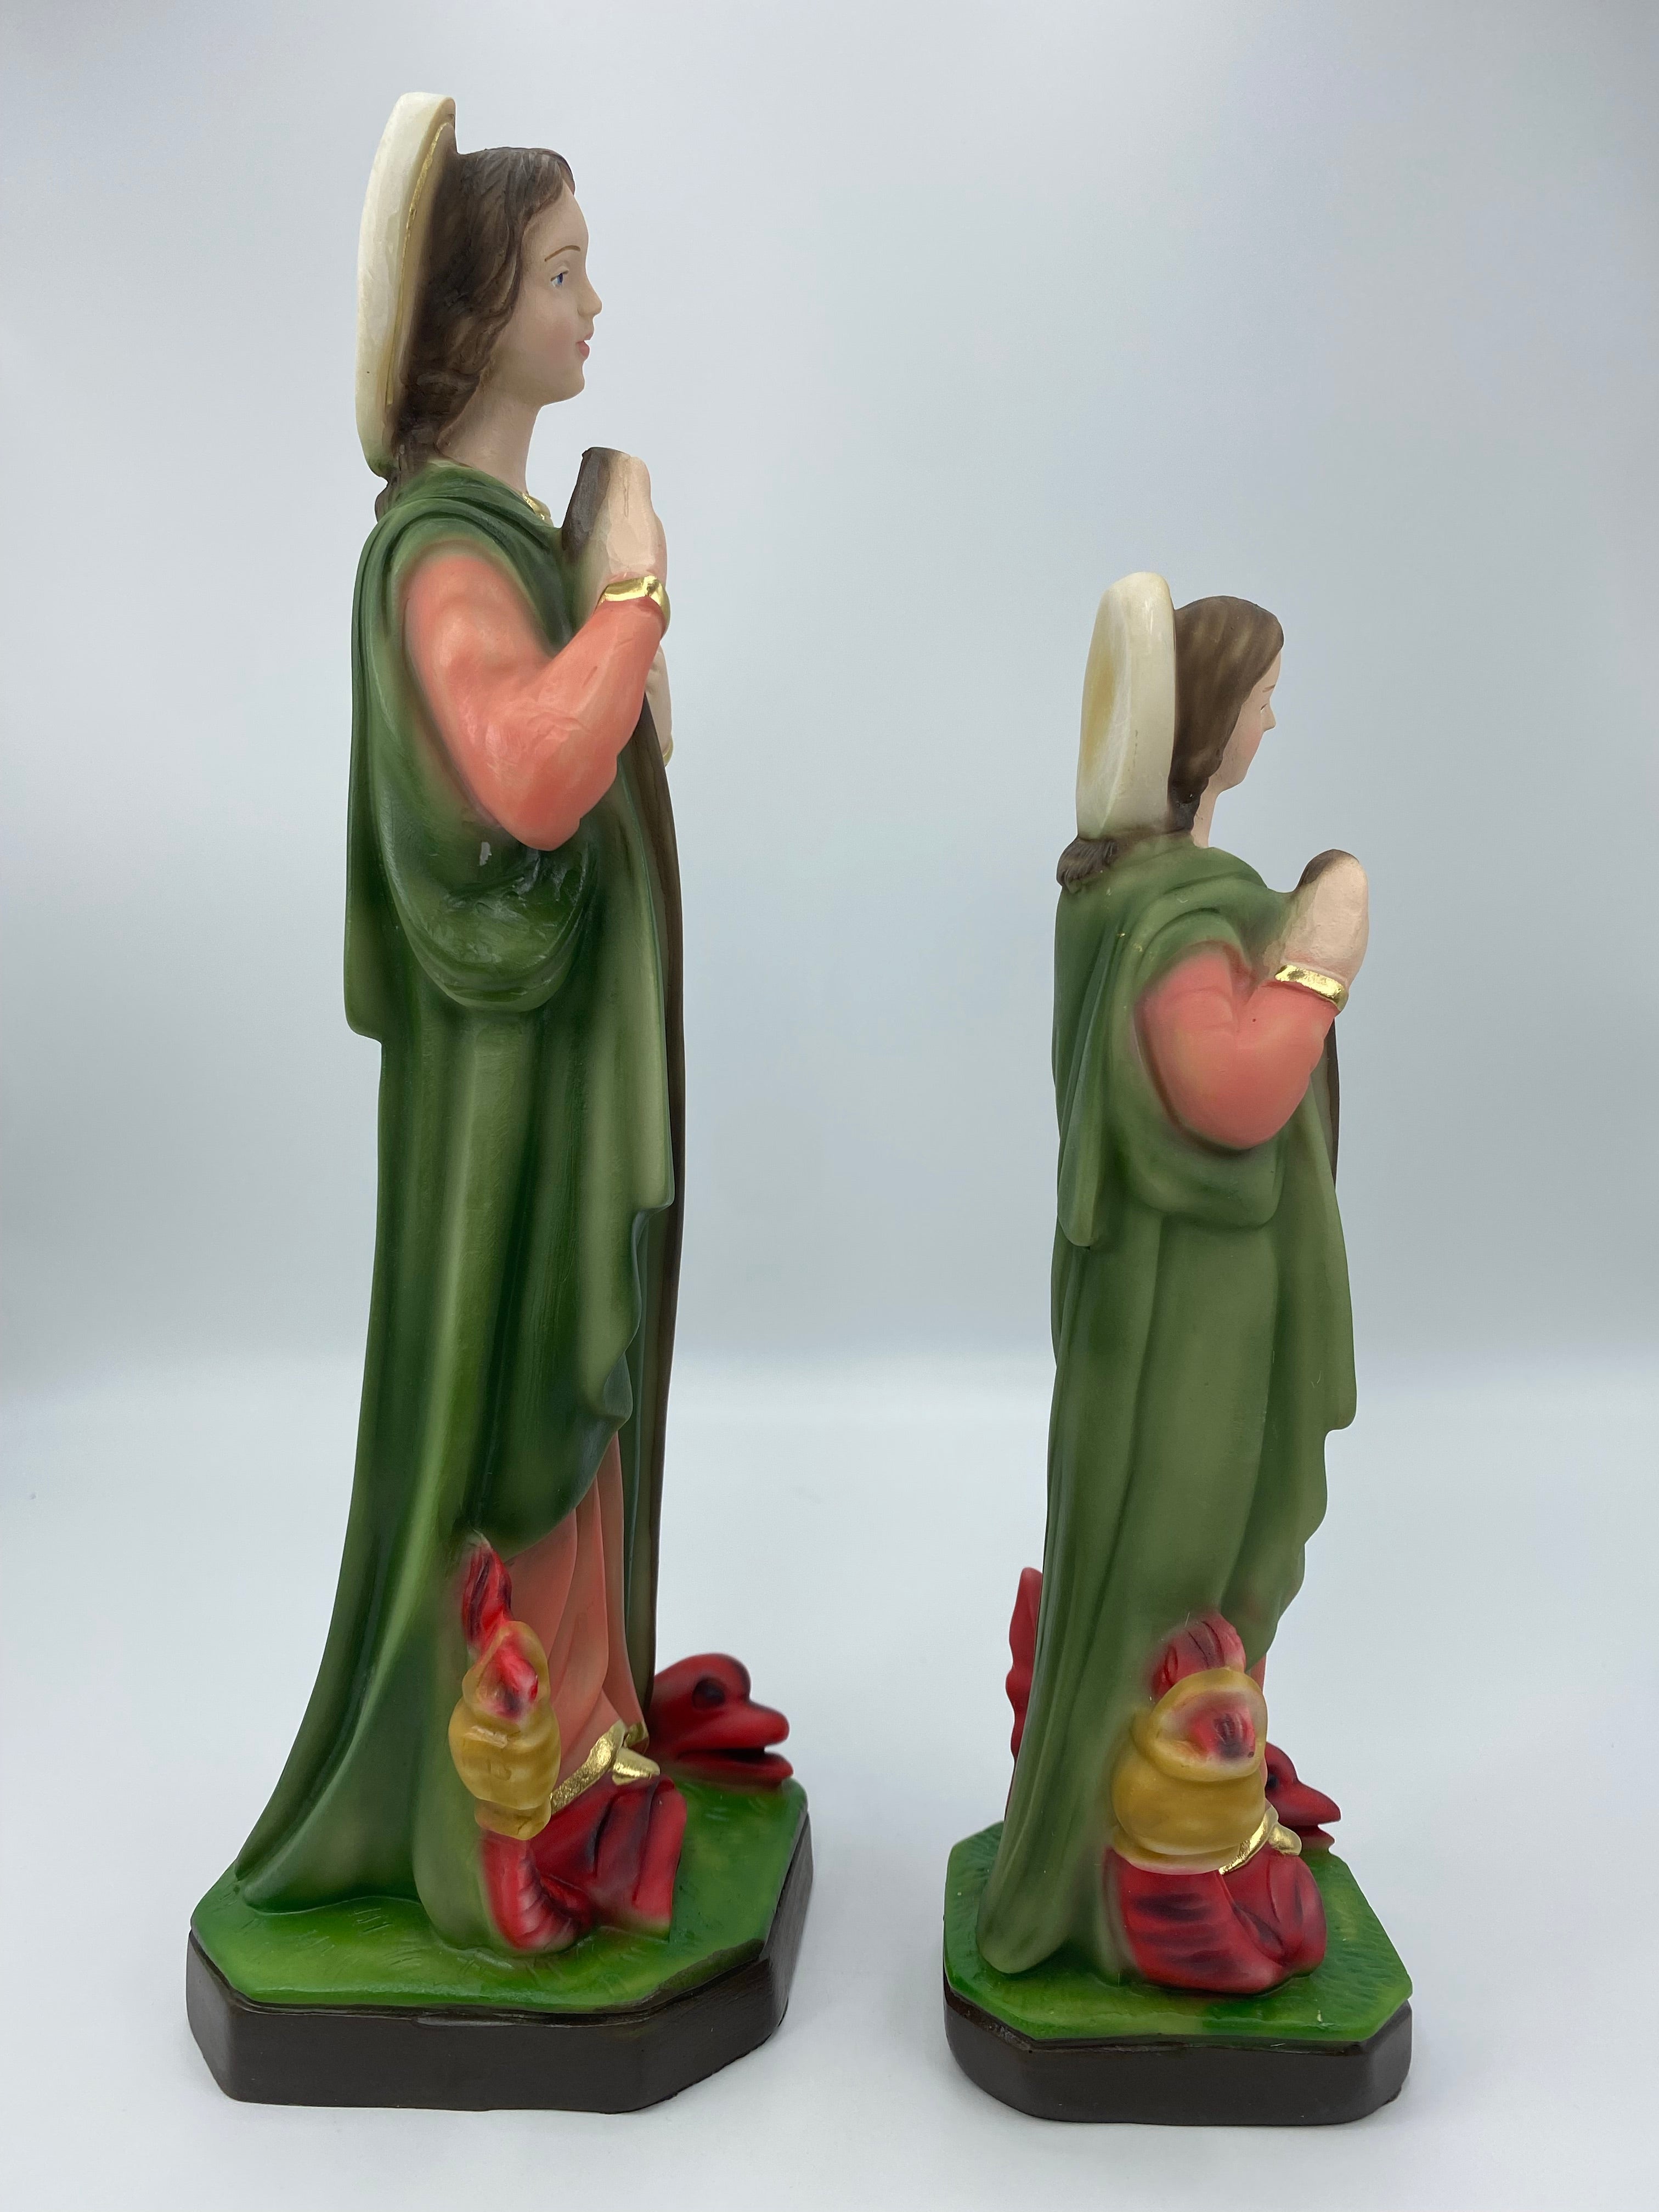 The Faith Gift Shop Saint Martha statue - Hand Painted in Italy - Our Tuscany Collection - Estatua de Santa Ana